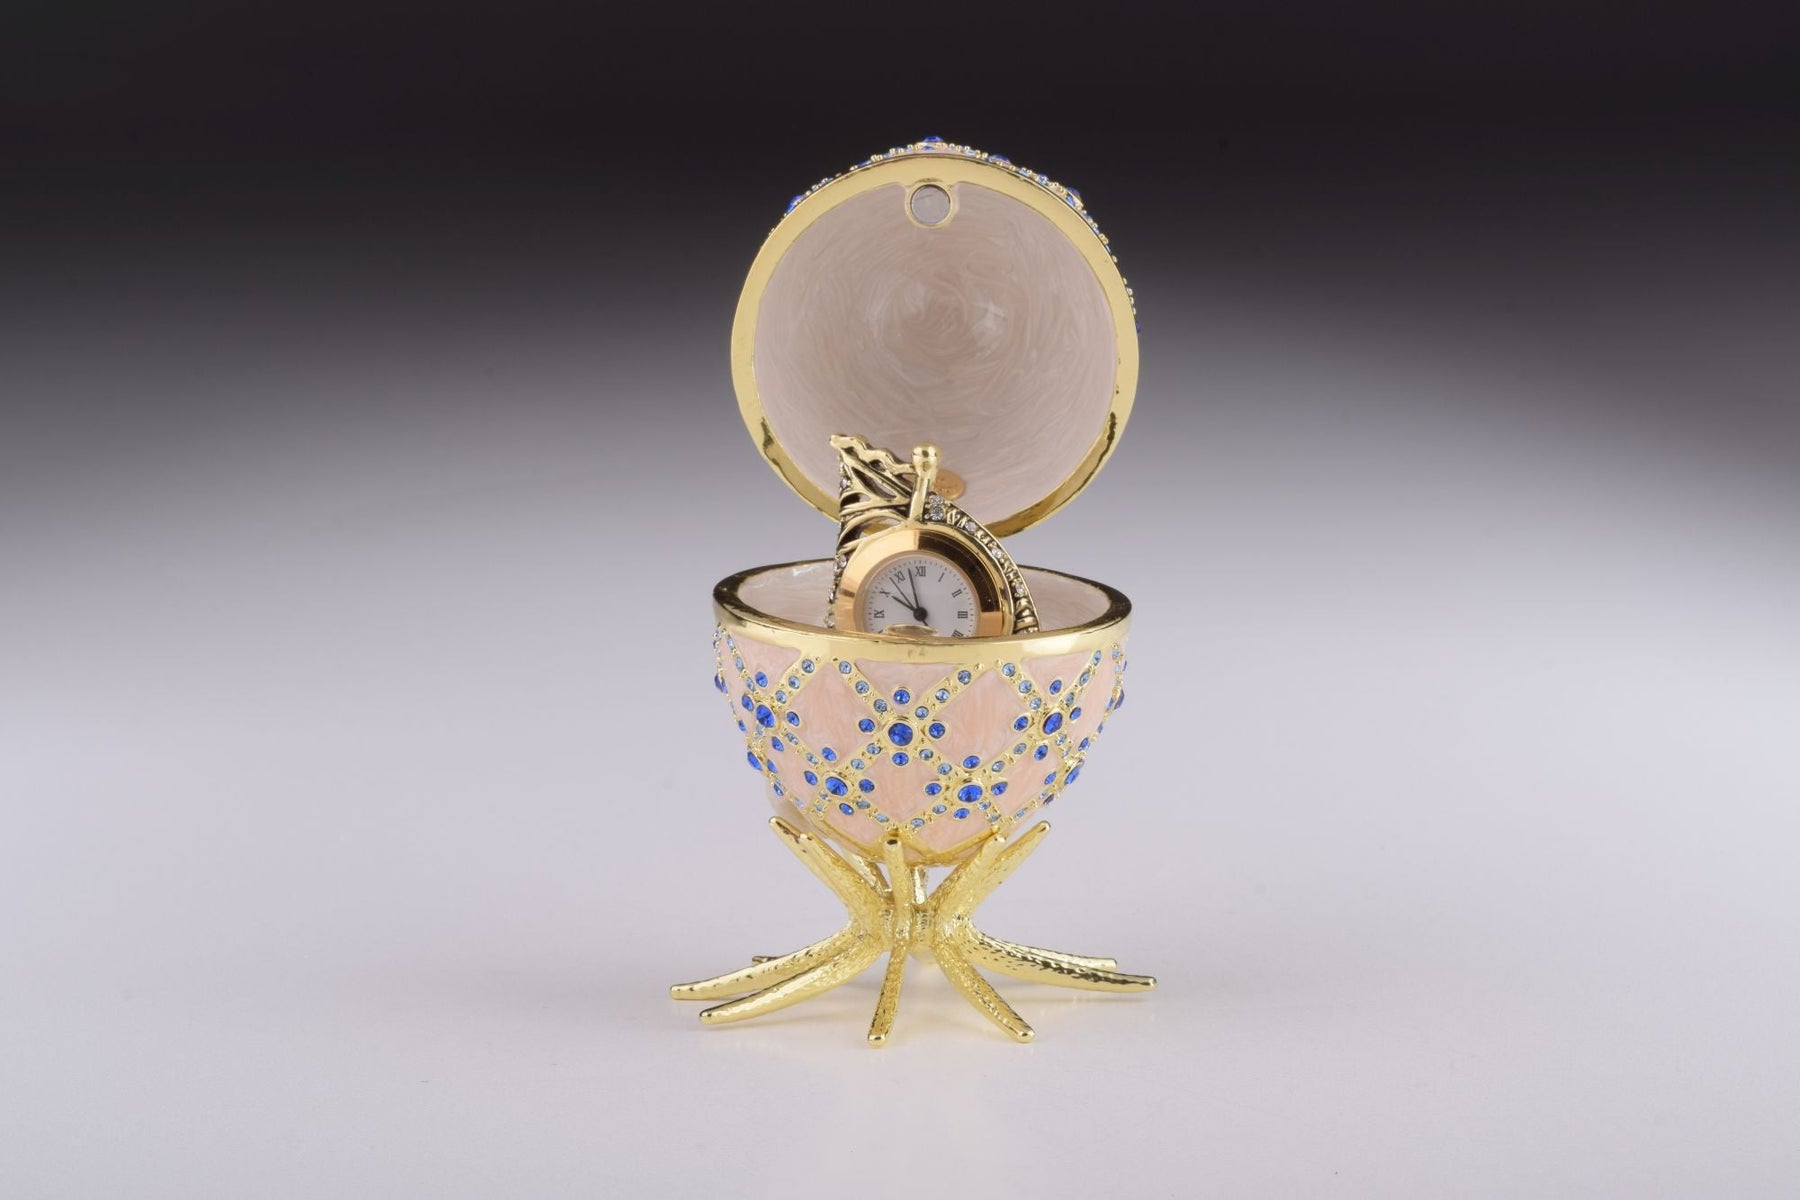 Rosa Fabergé-Ei mit Uhr im Inneren